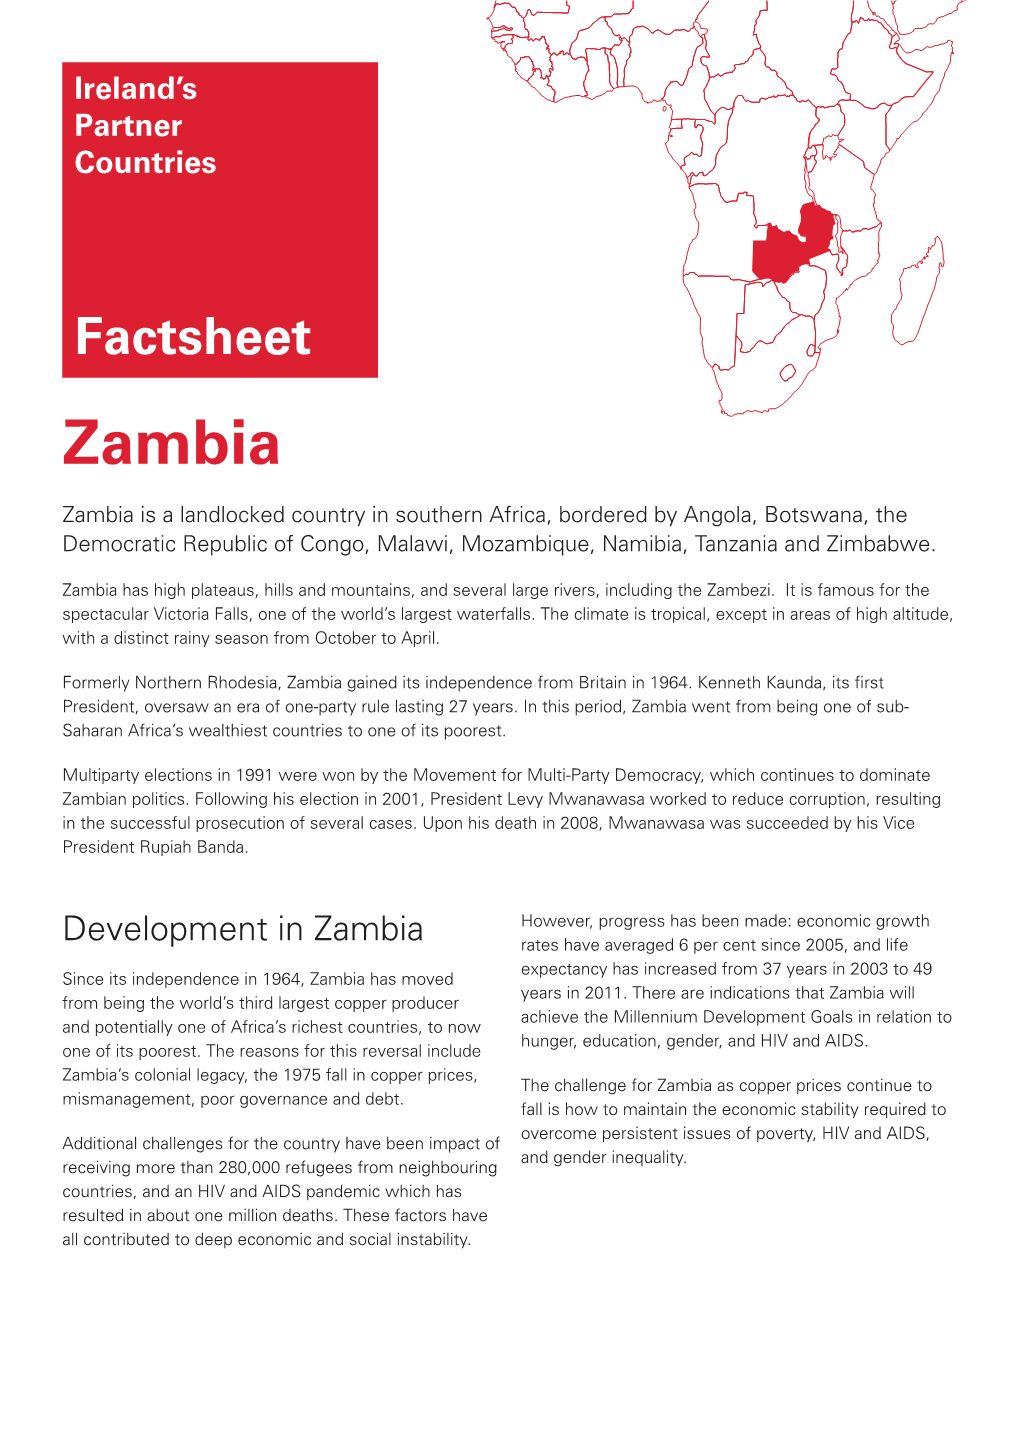 Factsheet Zambia